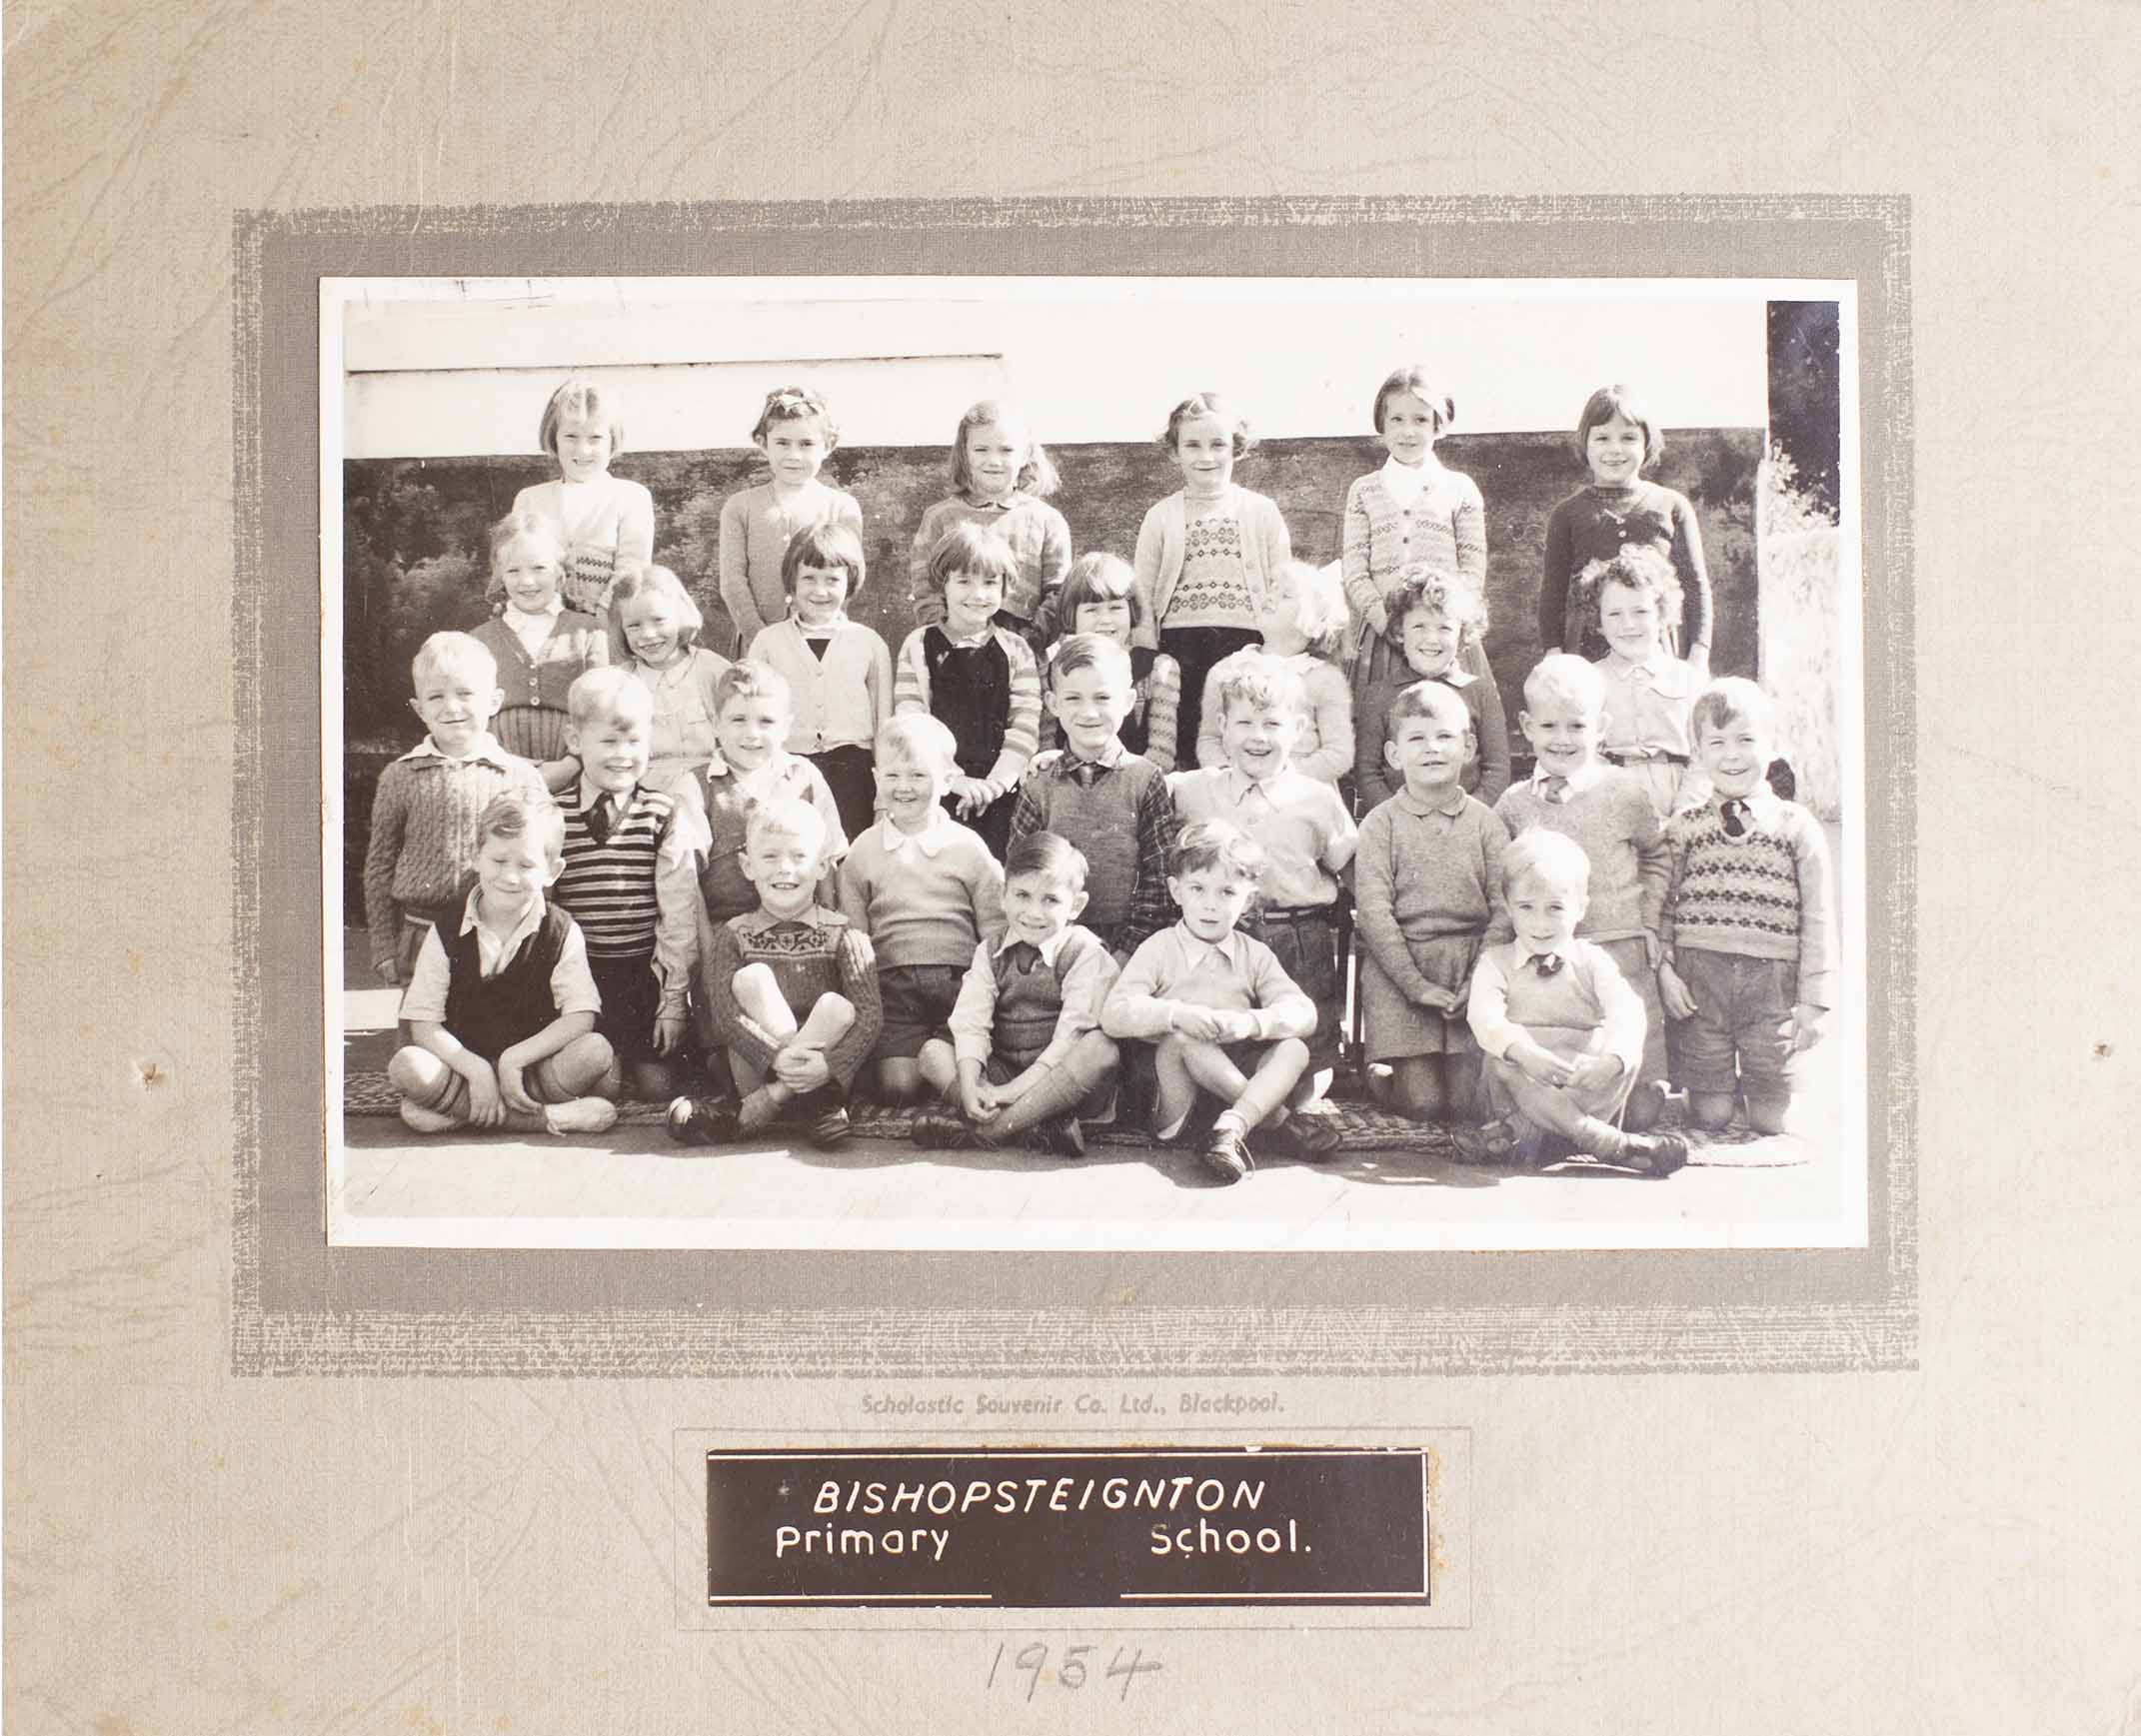 Mounted Photograph of Bishopsteignton School Class Photo 1954